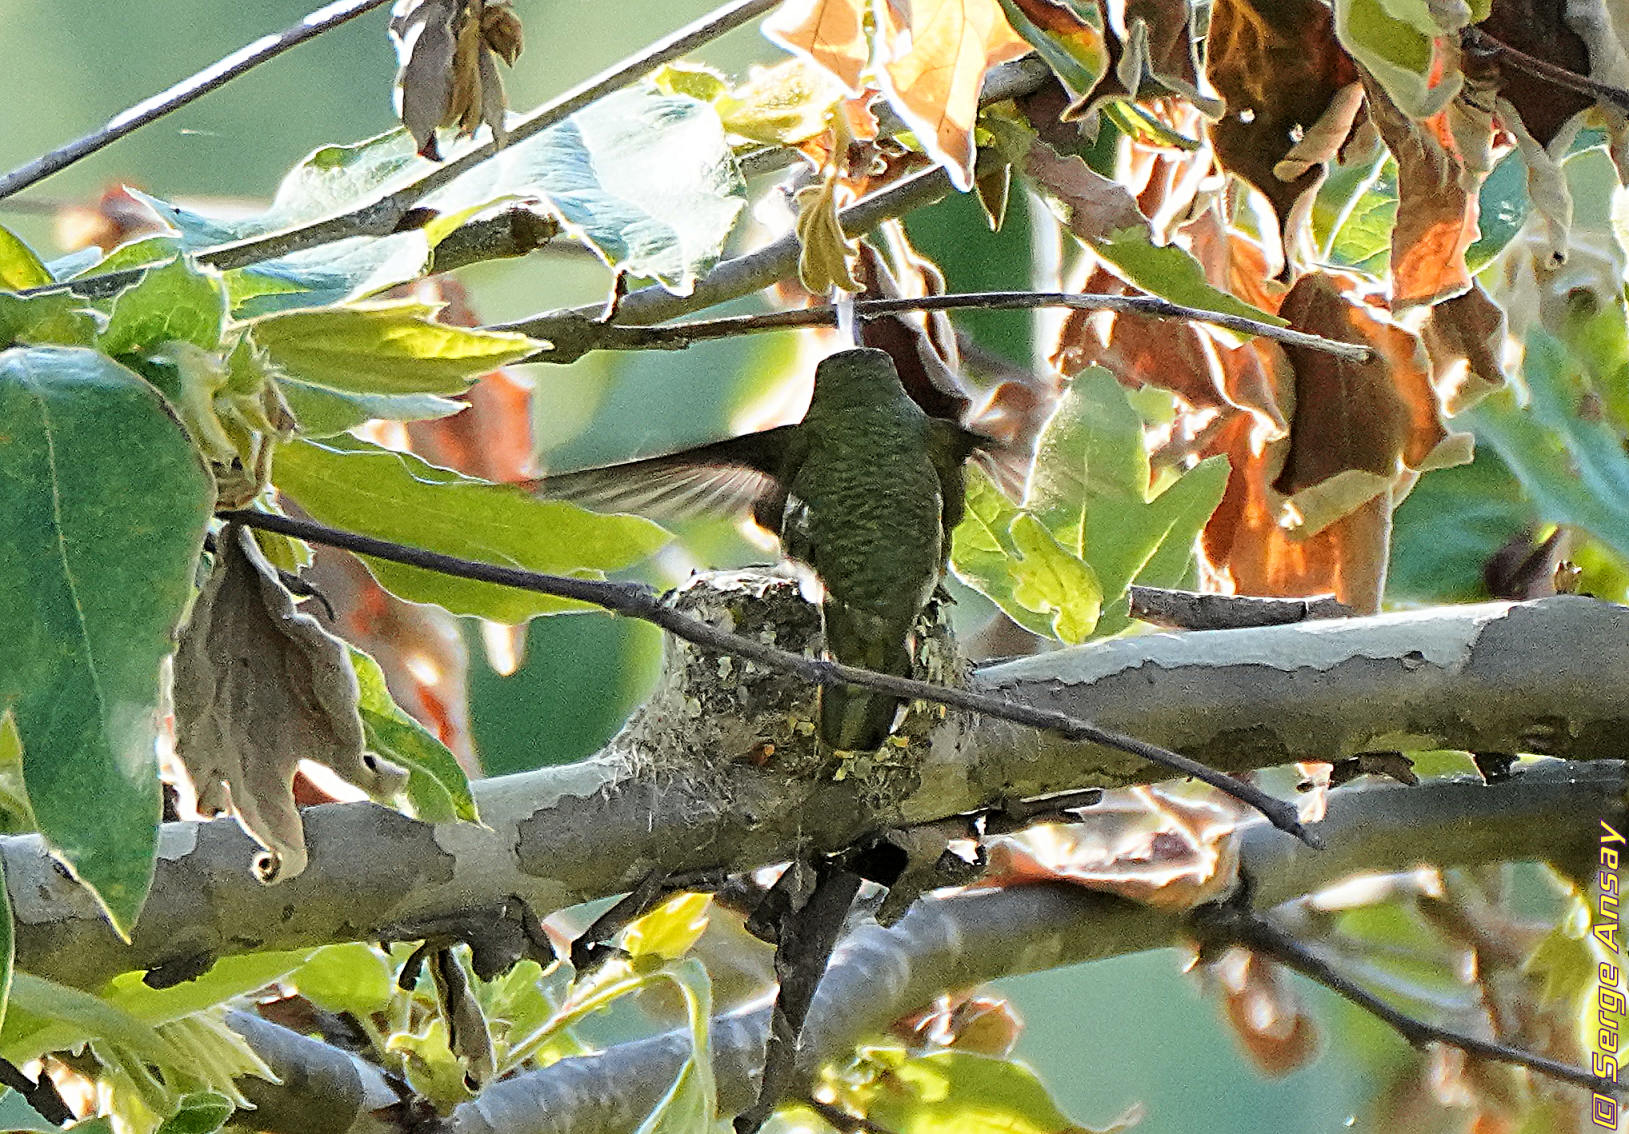 Hummingbird sitting on his nest, presumably brooding